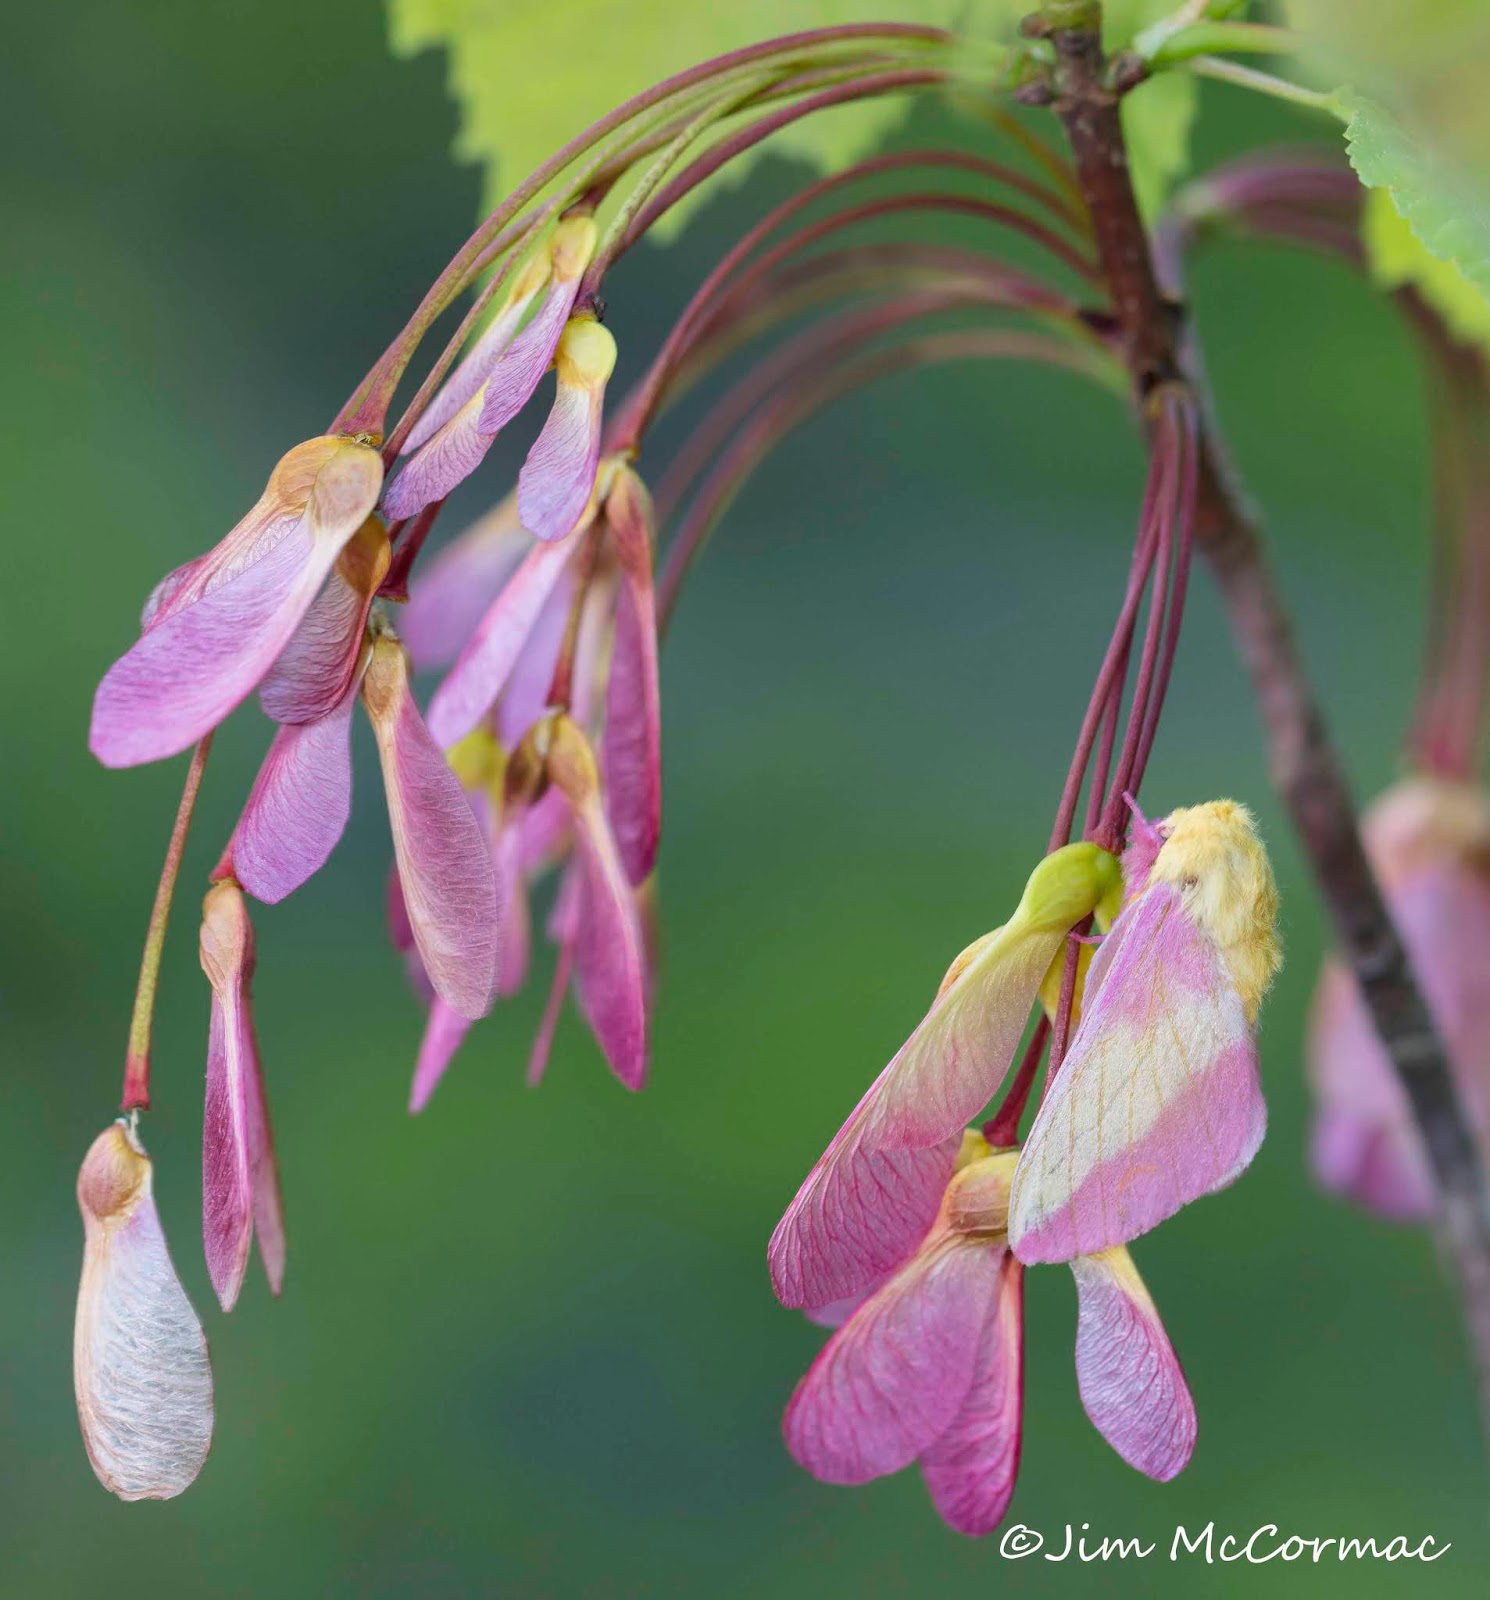 Ohio Birds and Biodiversity: Colorful camouflage: Rosy Maple Moth